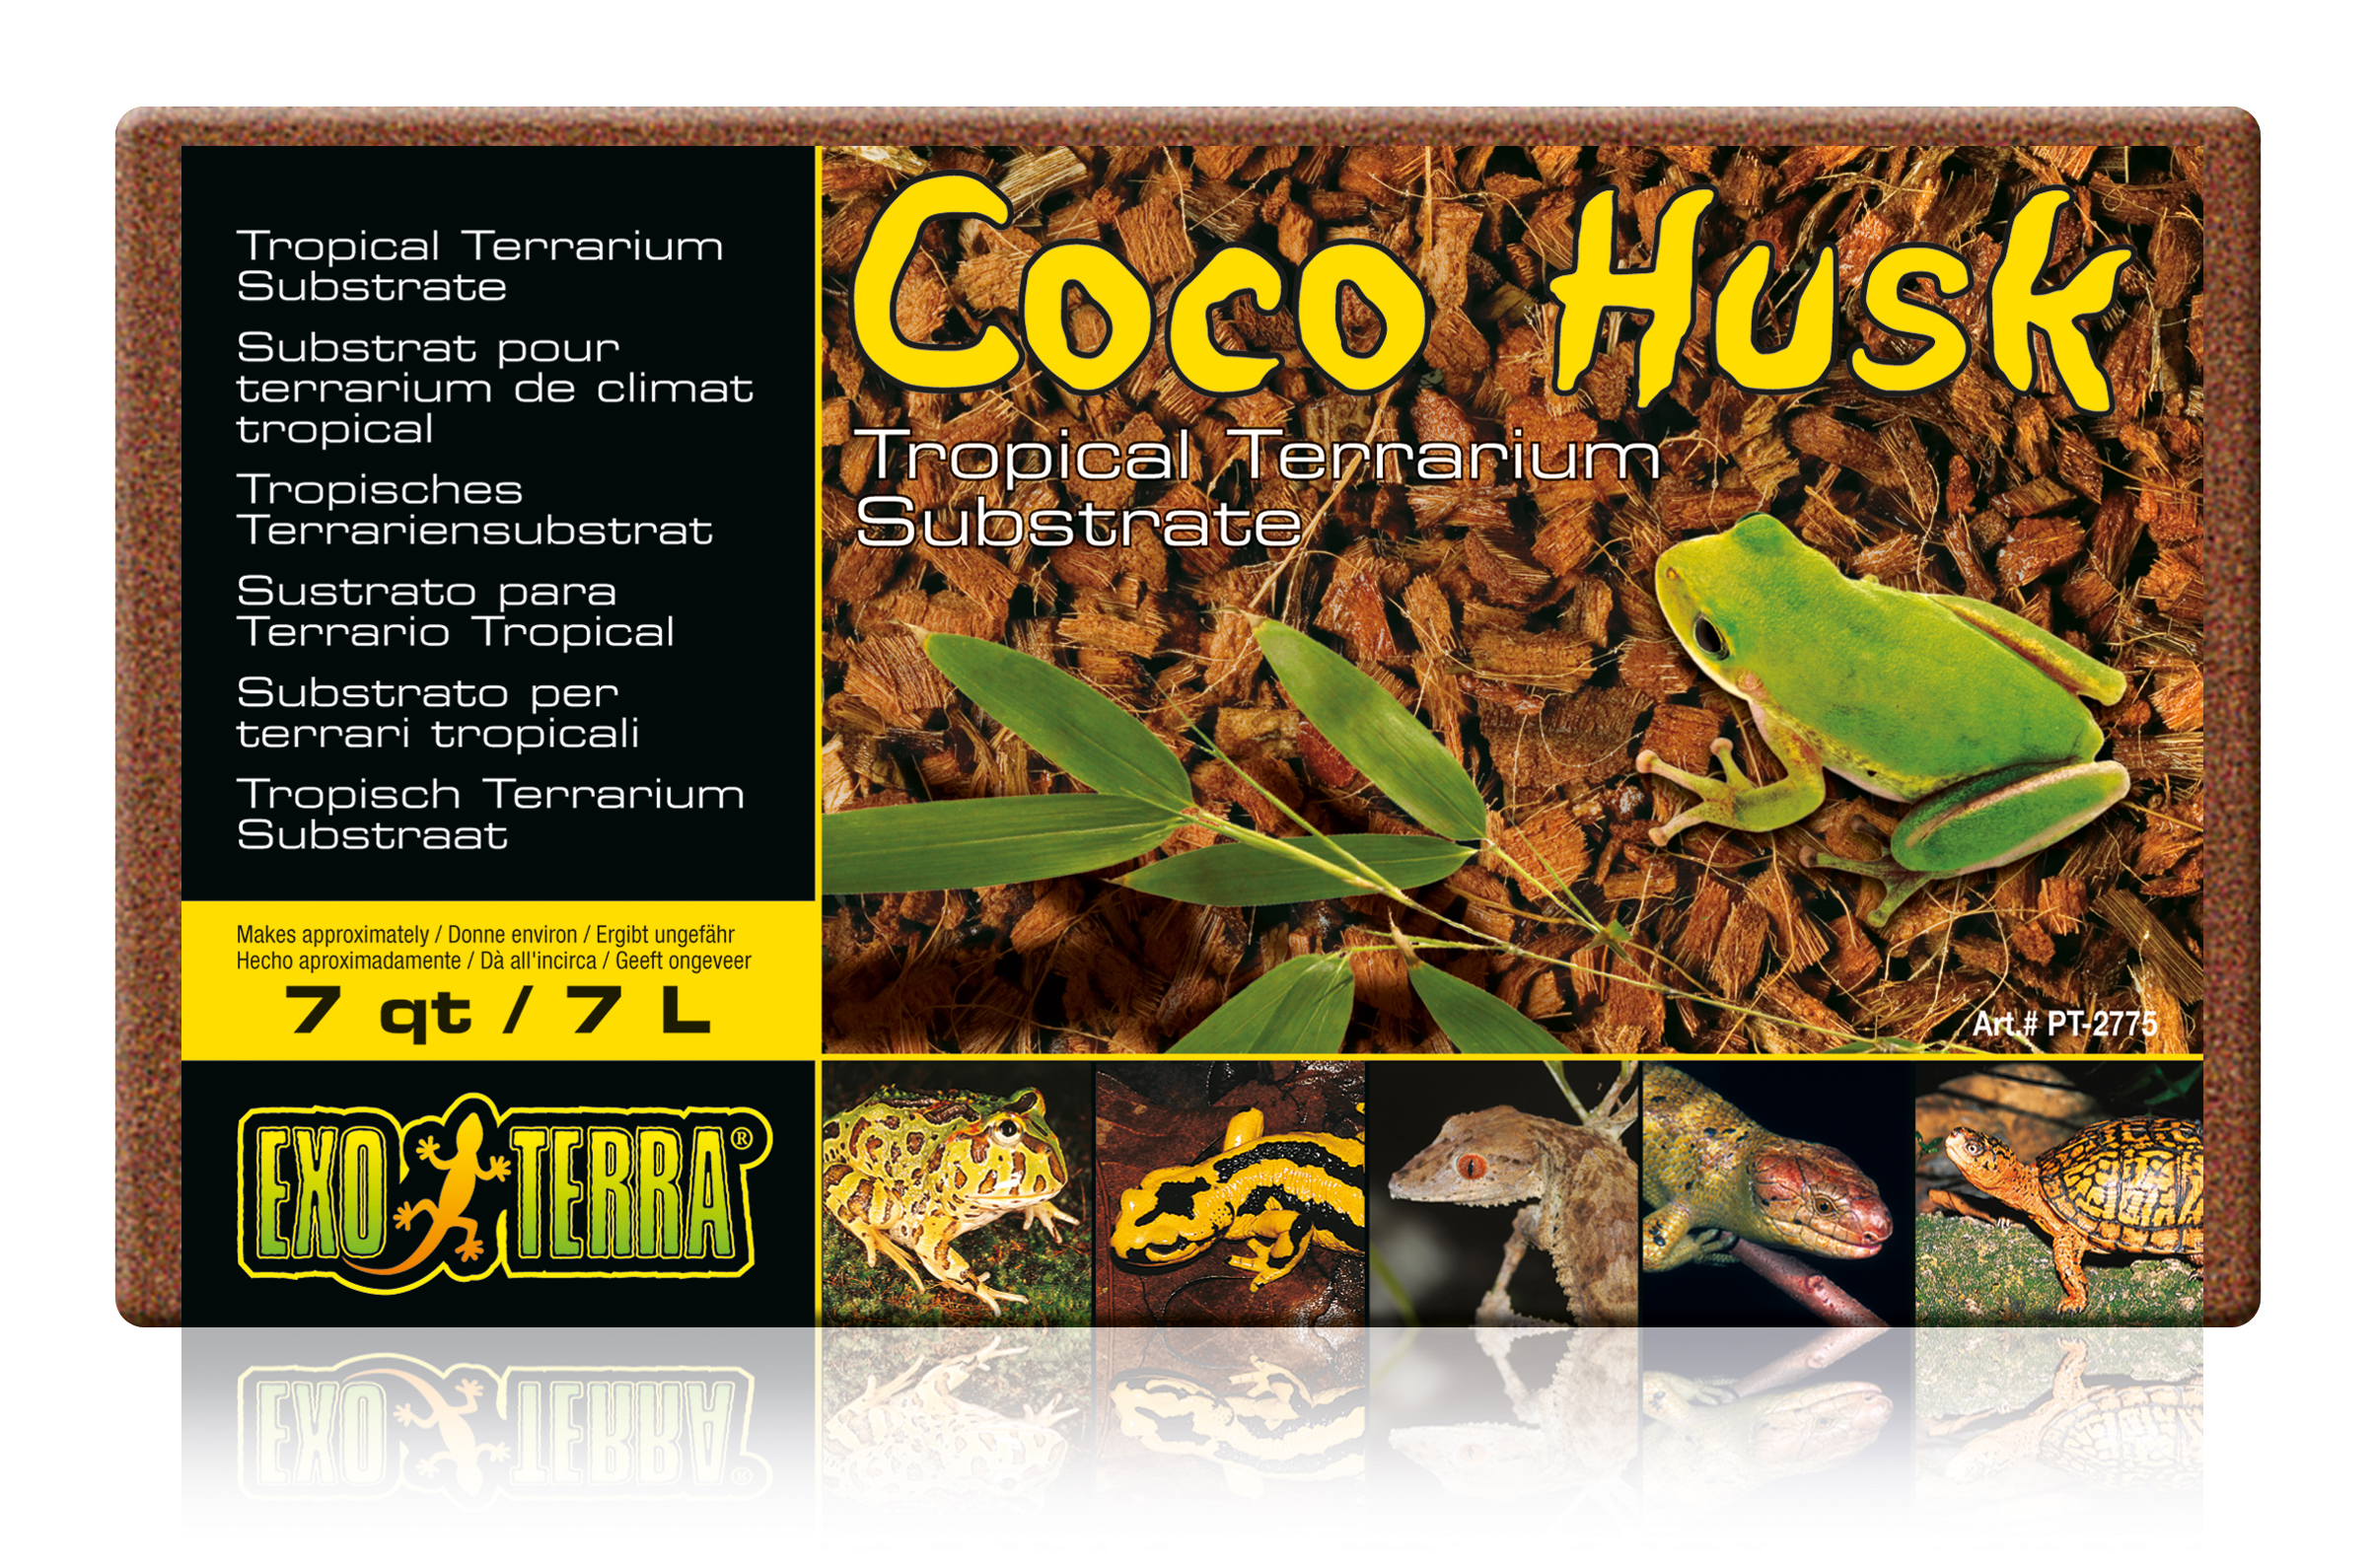 Ex coco husk, kokoschips - <Product shot>